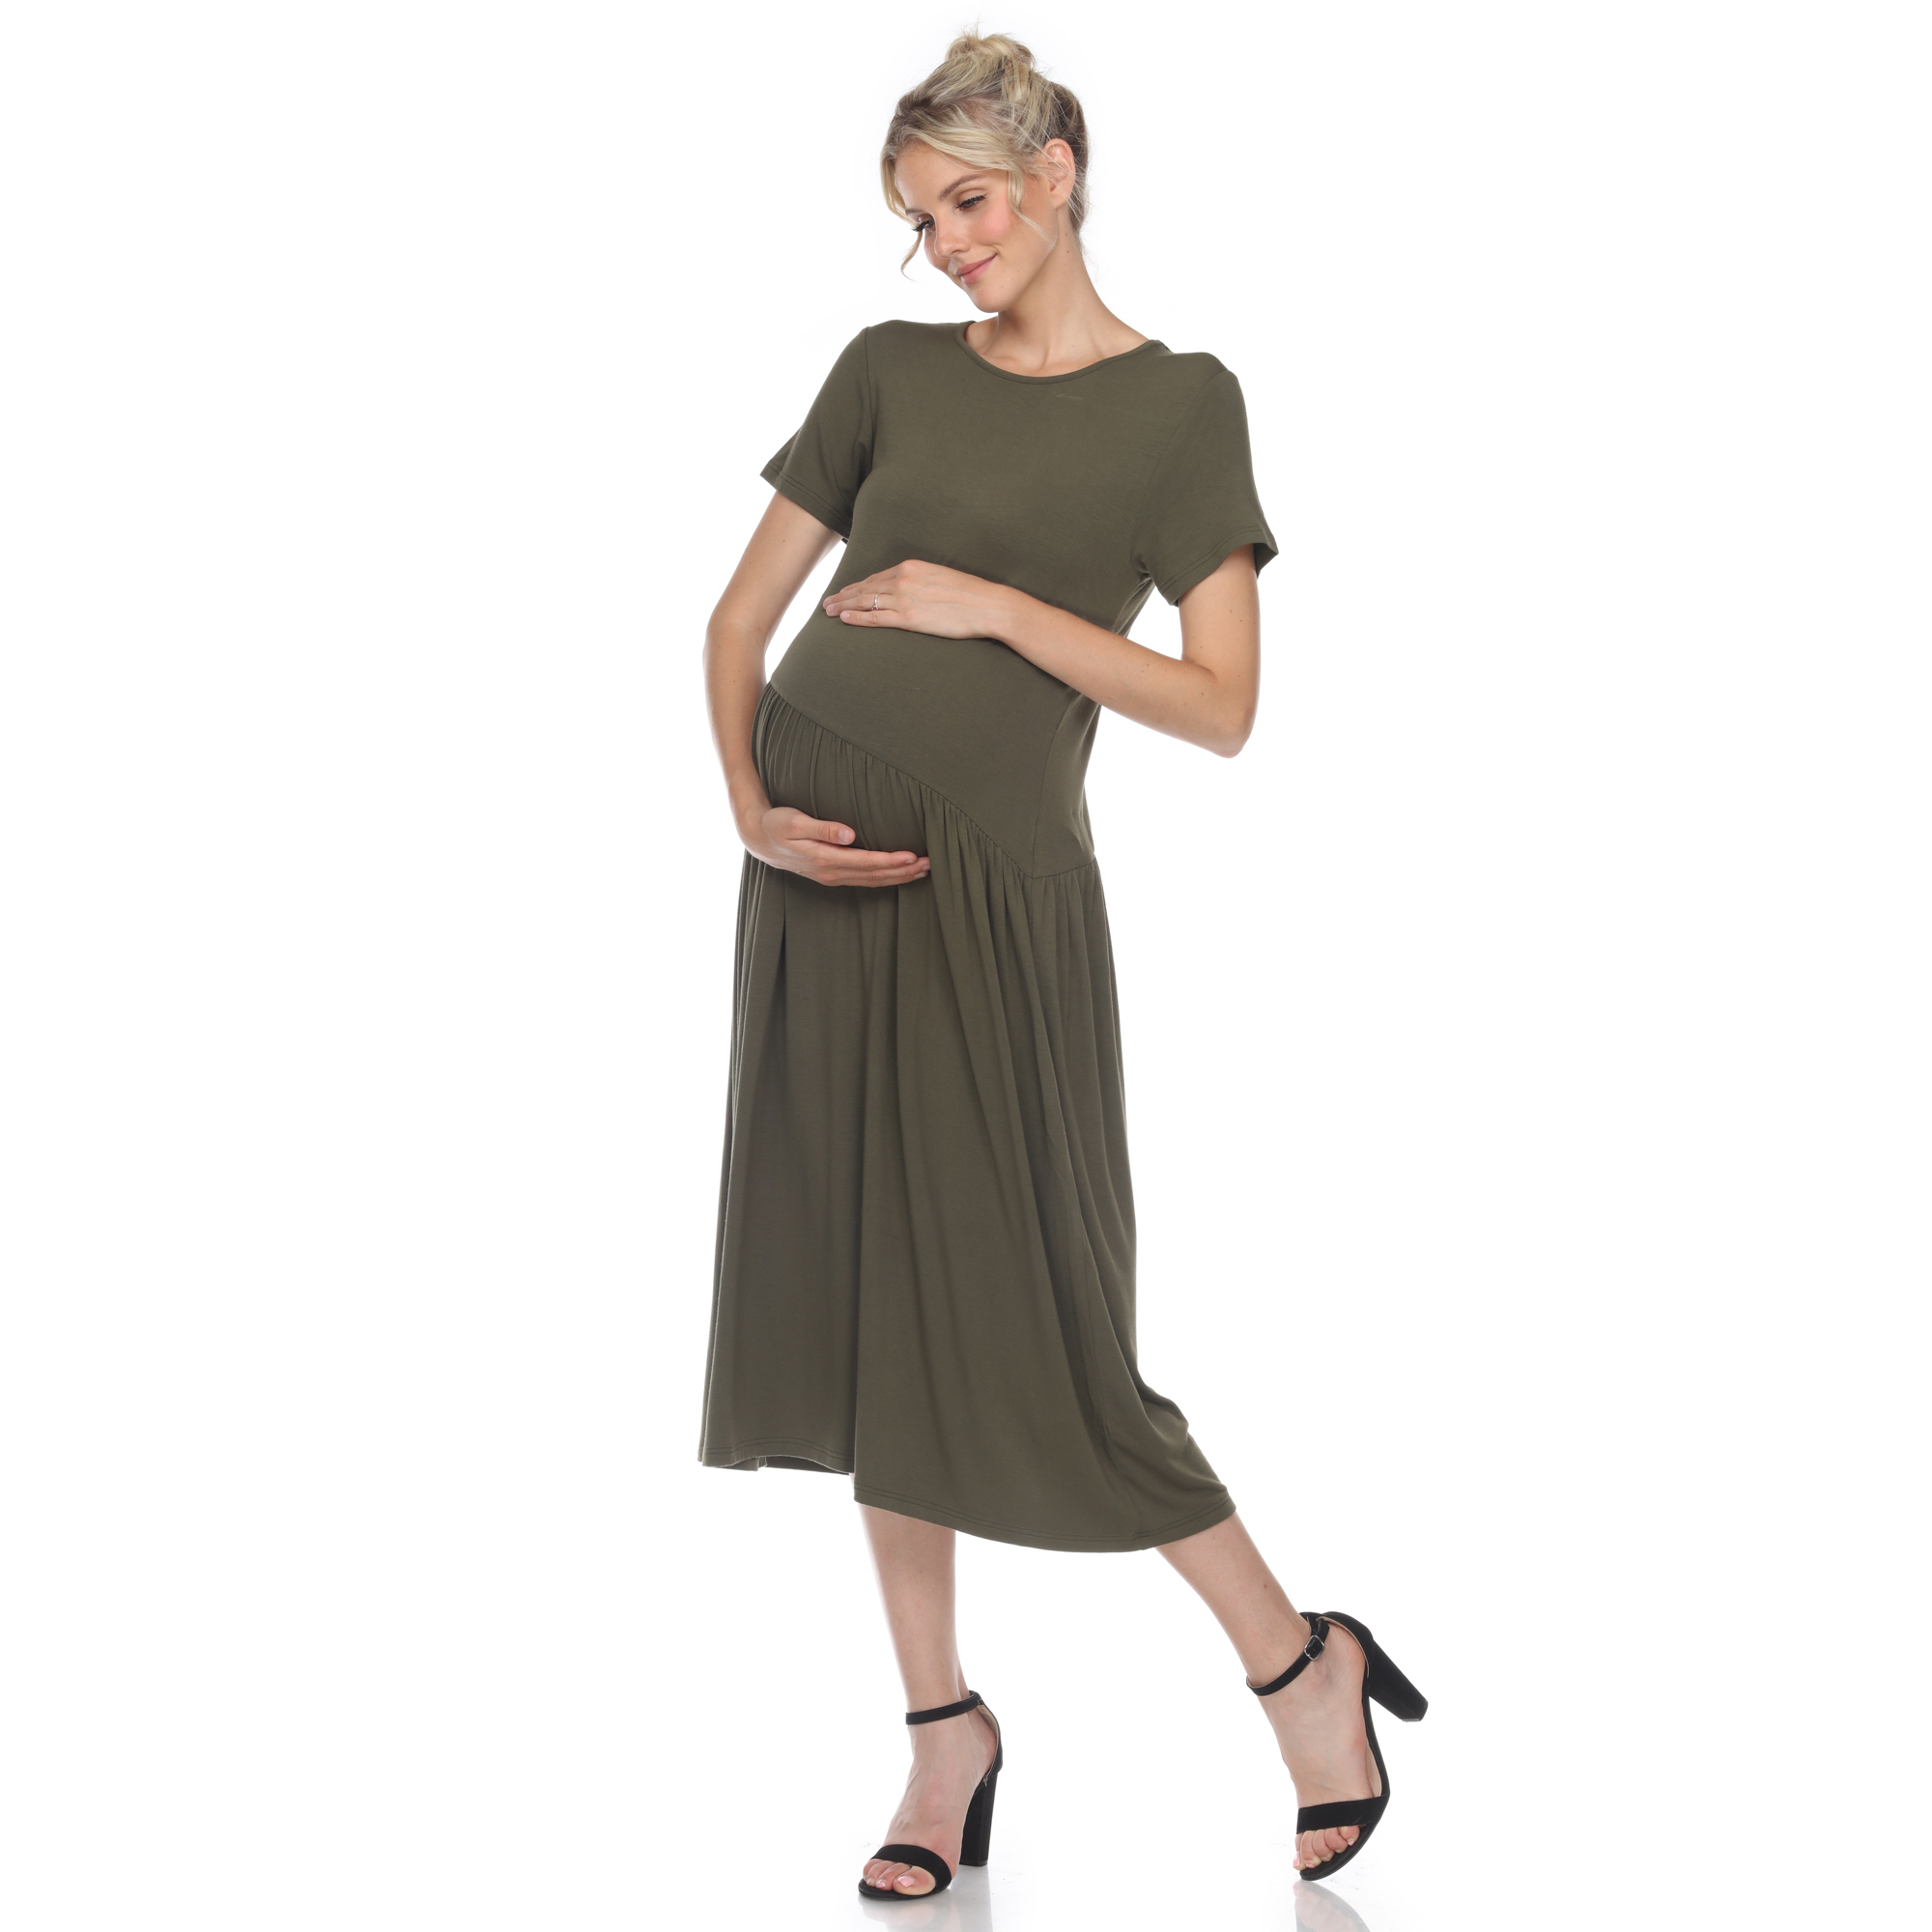 White Mark Womenâs Maternity Short Sleeve Maxi Dress - Olive, X-Large